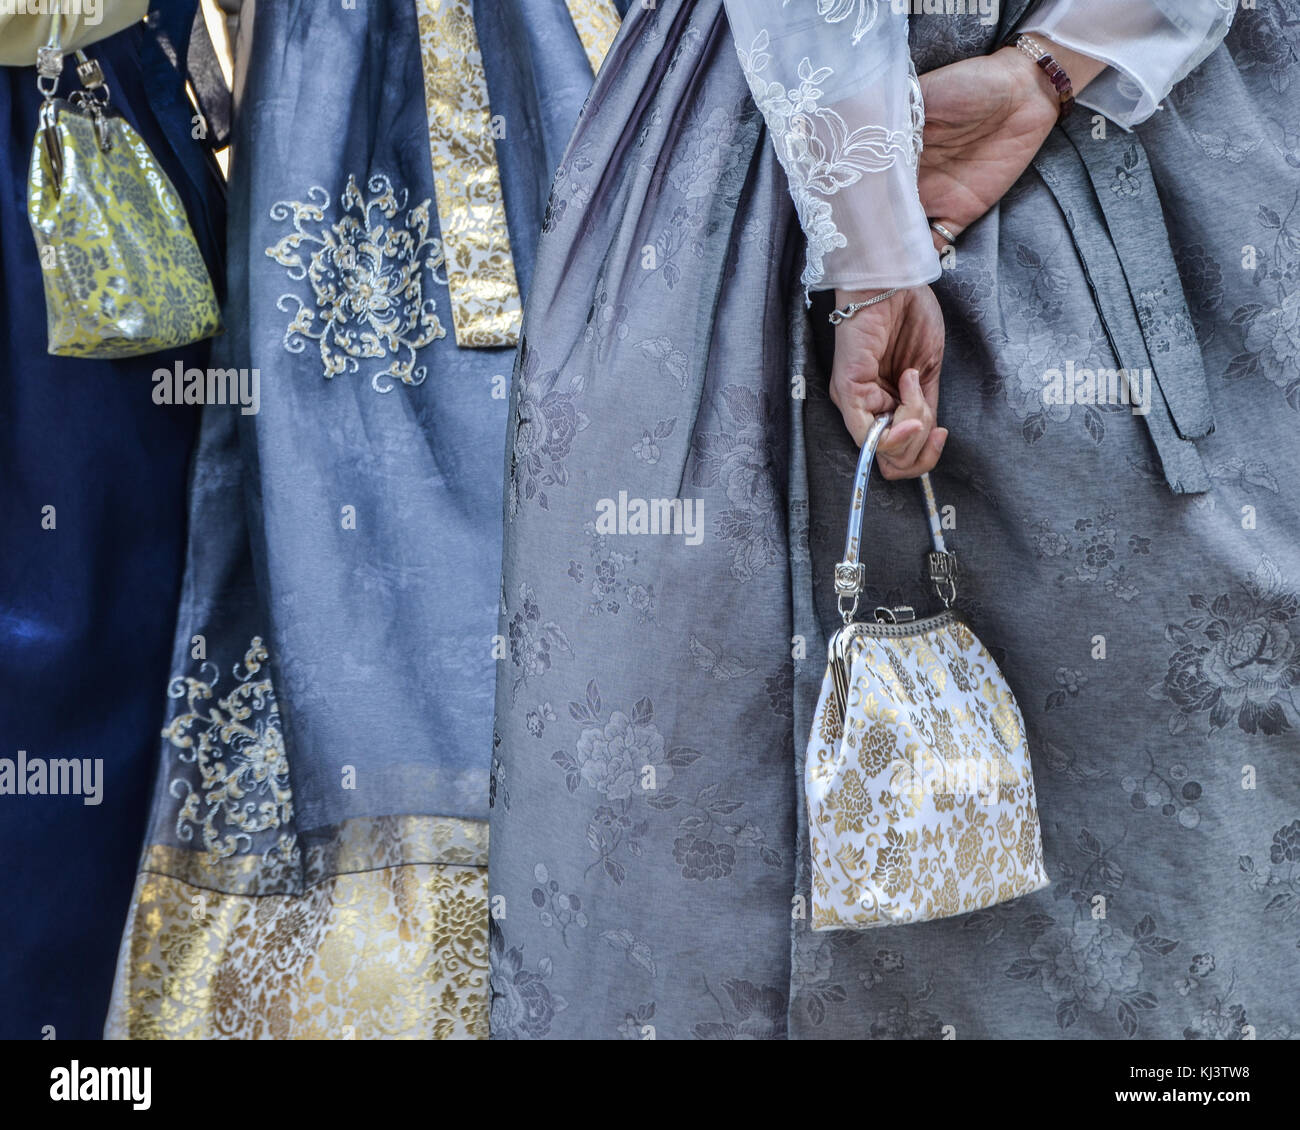 Closeup details of fabric and handbags of three girls traditional dress, Seoul, South Korea Stock Photo